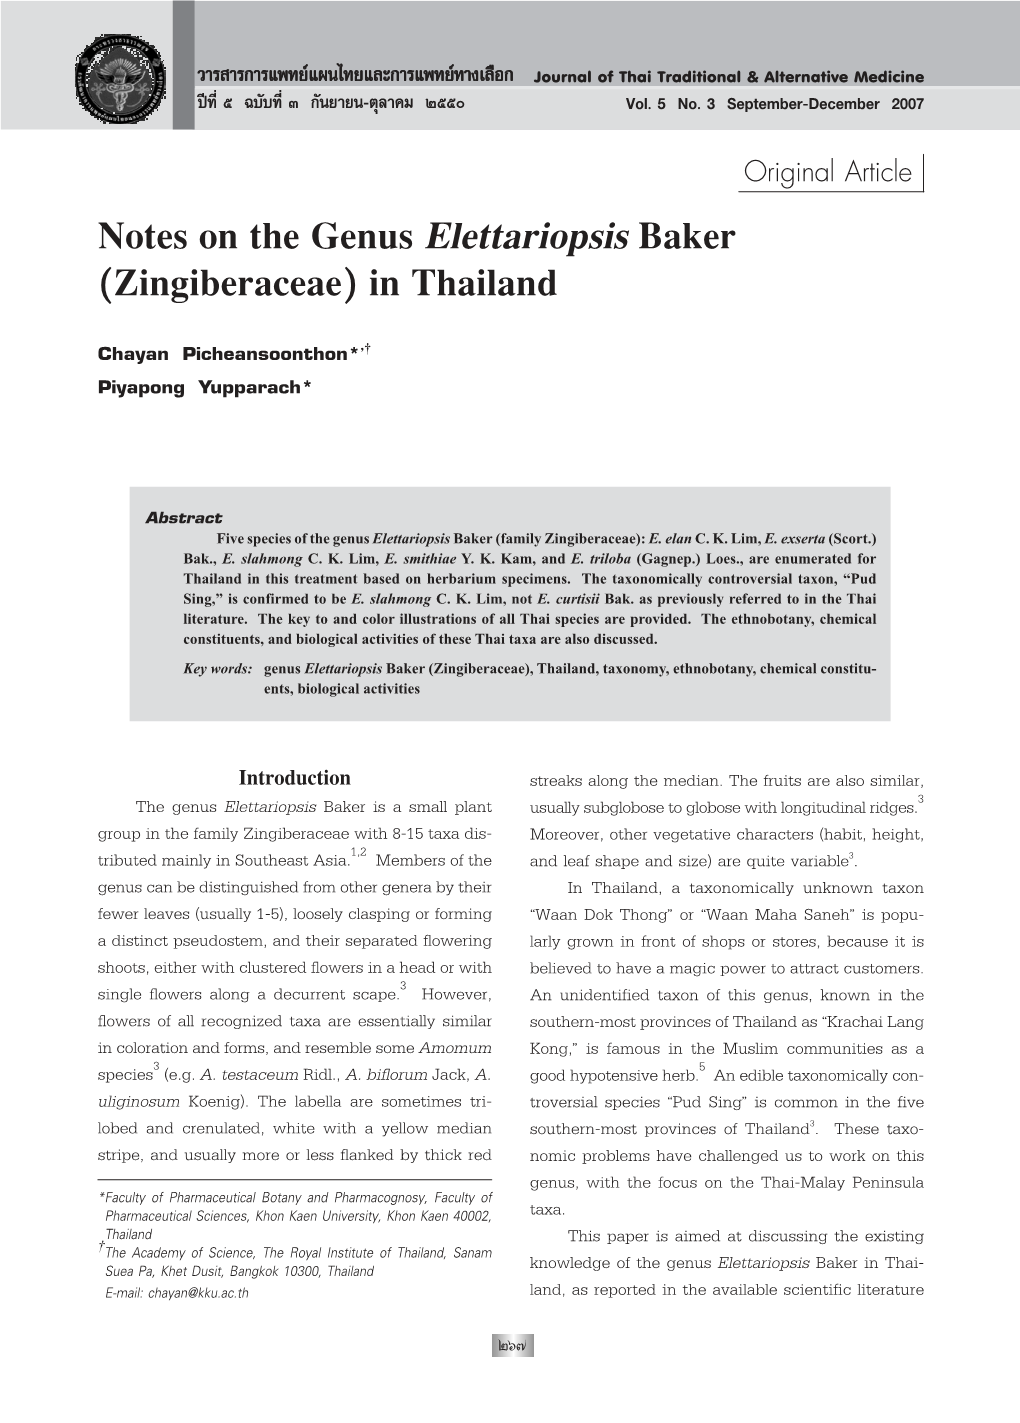 Notes on the Genus Elettariopsis Baker (Zingiberaceae) in Thailand